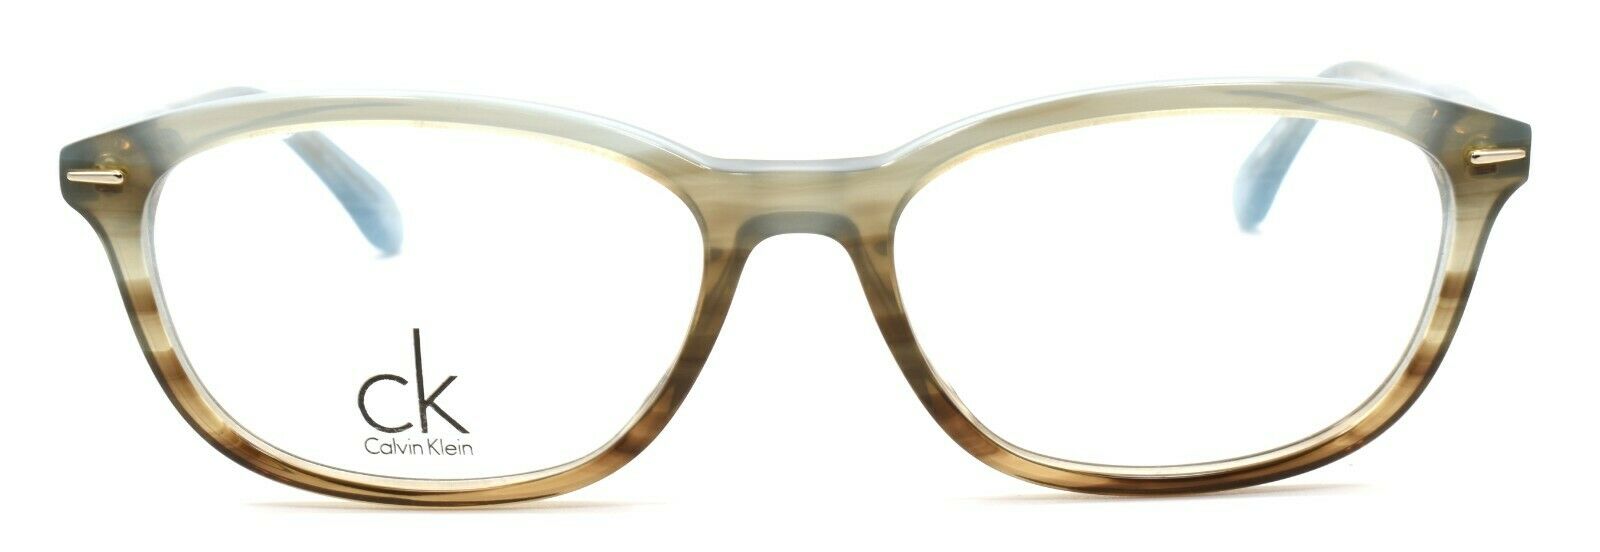 2-Calvin Klein CK5791 416 Women's Eyeglasses Frames 51-16-135 Azure Earth-750779057353-IKSpecs